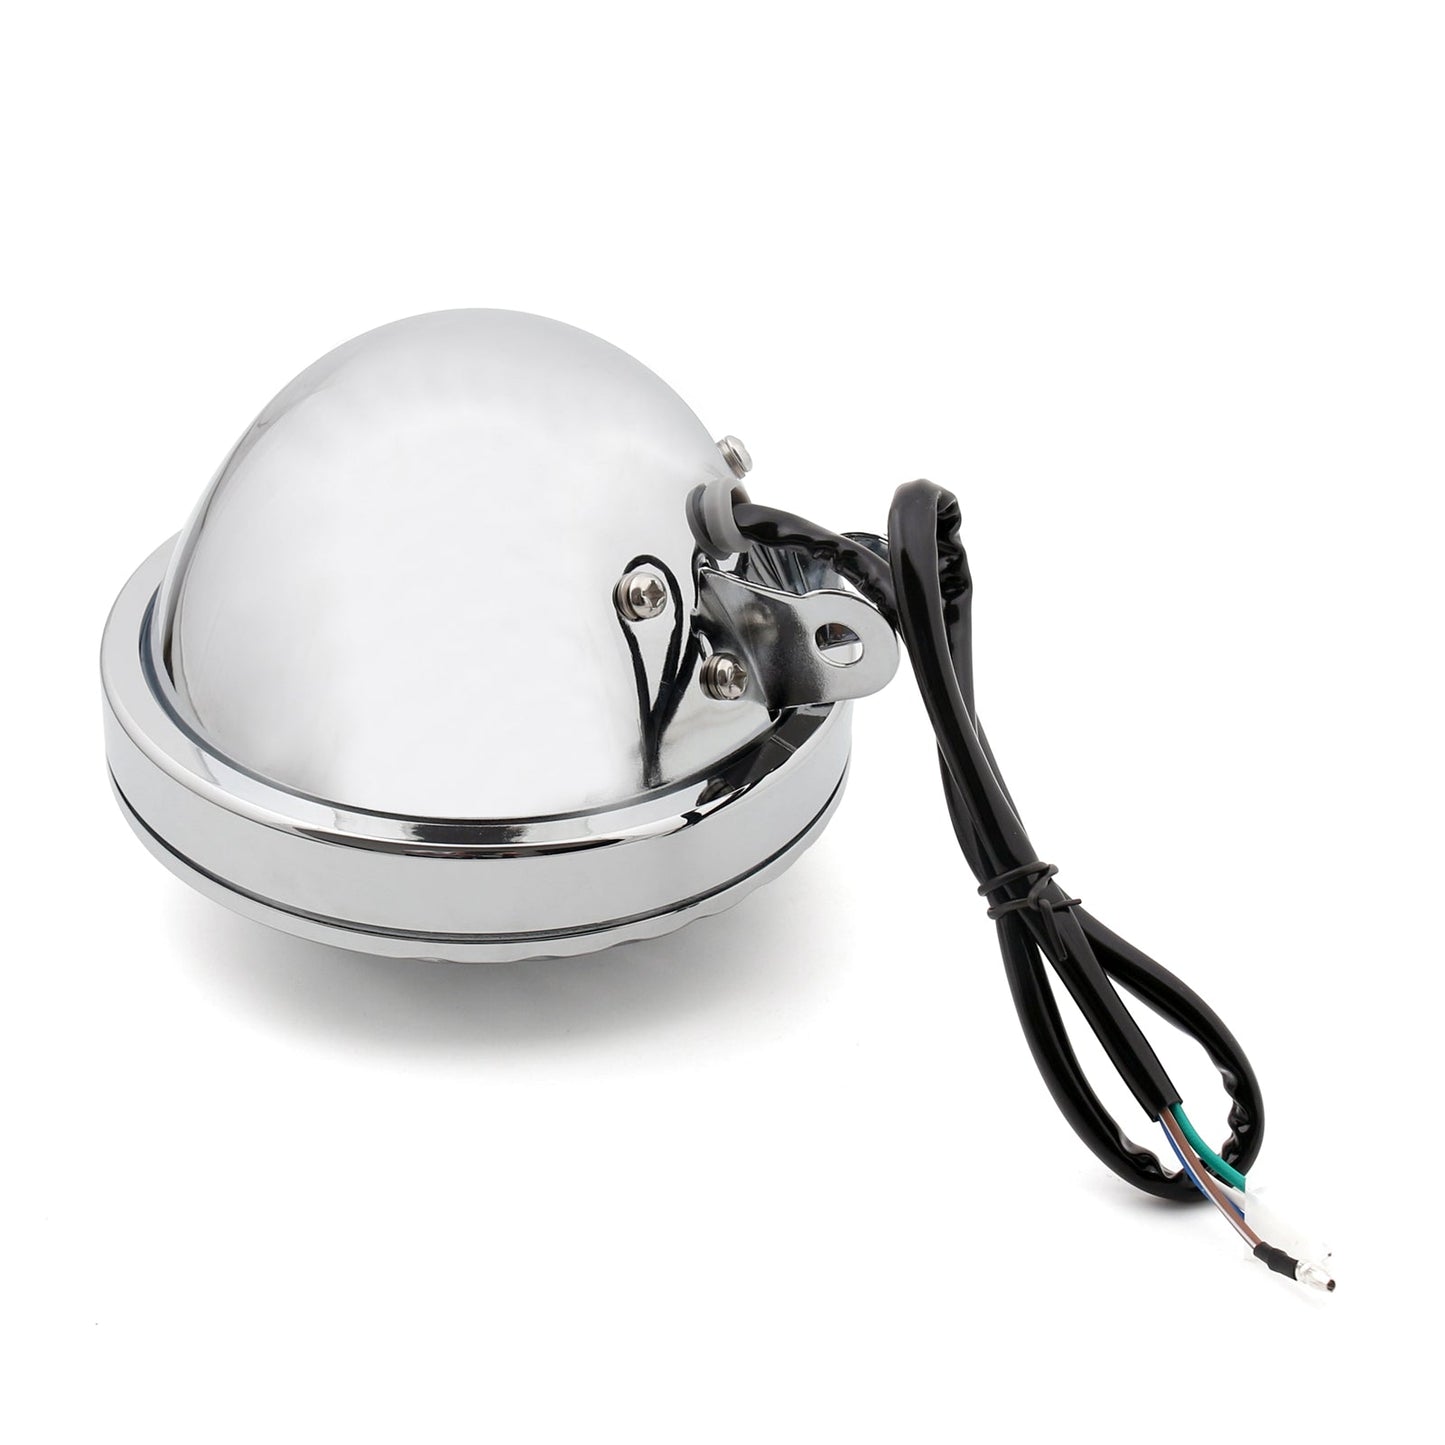 5 3/4" Headlight Headlamp w/ Grill Guard Chrome for Sportster XL883 XL1200 04-14